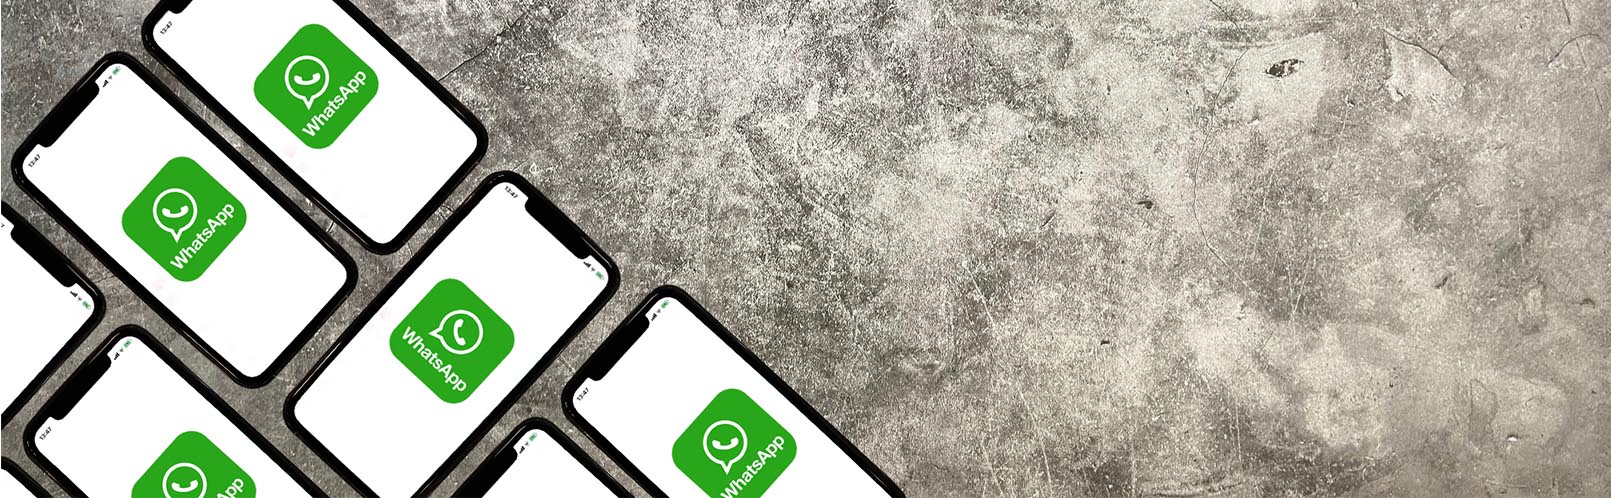 WhatsApp Service - Boekel AGF